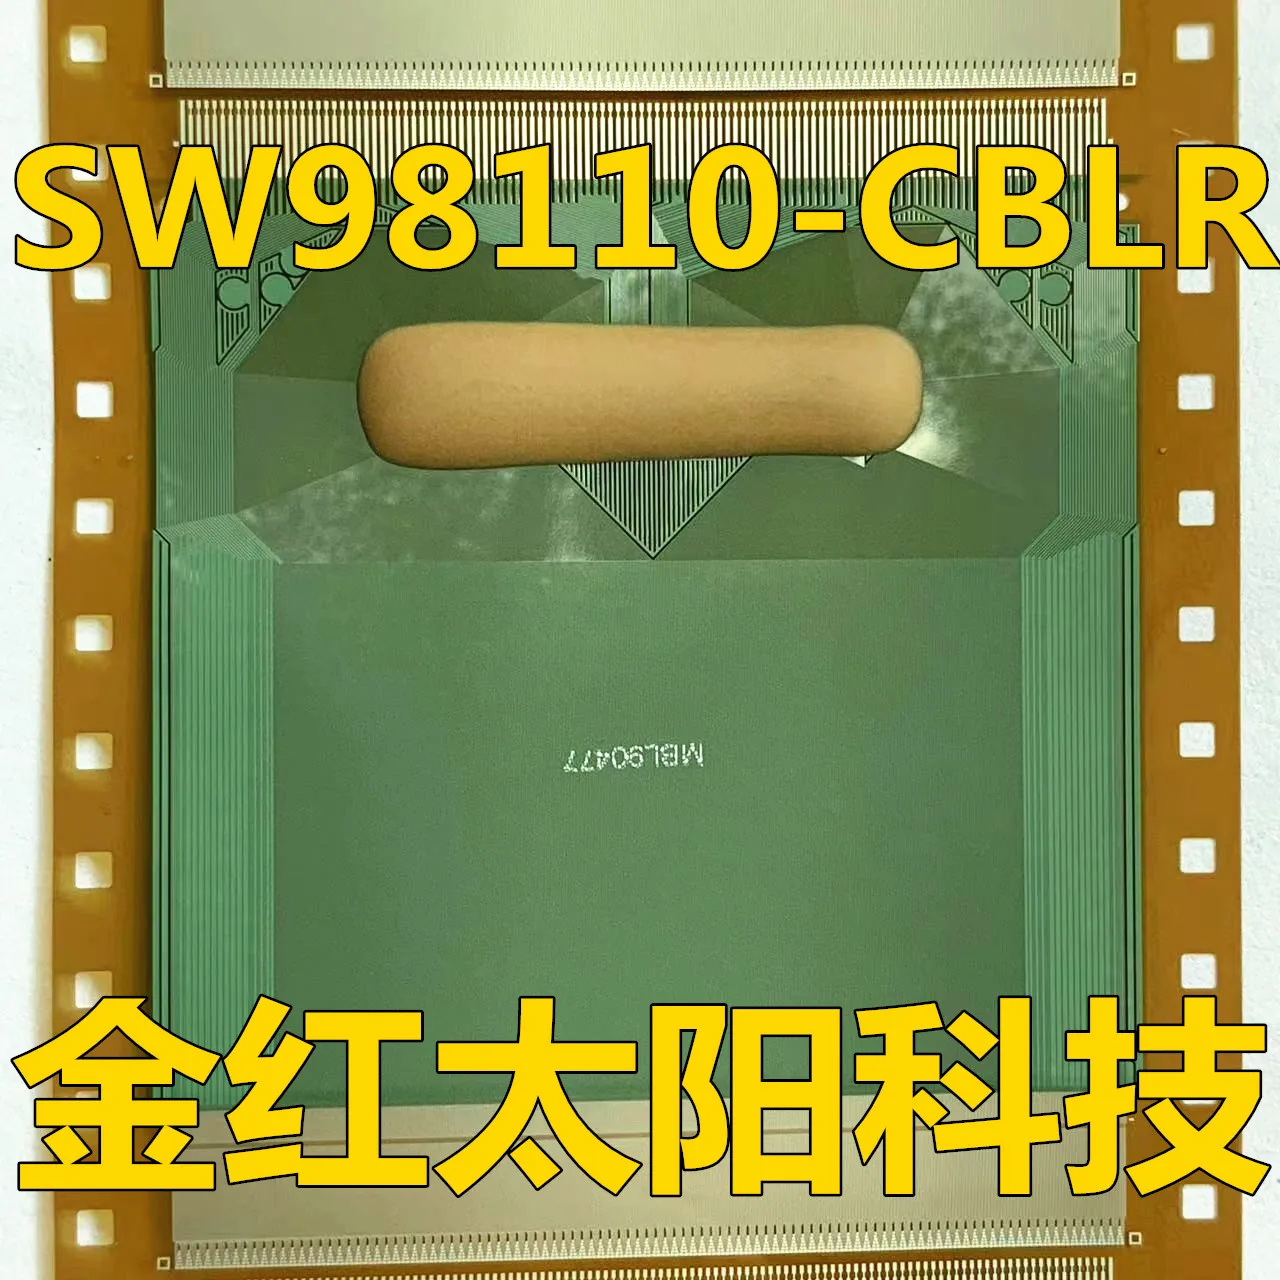 

SW98110-CBLR New rolls of TAB COF in stock